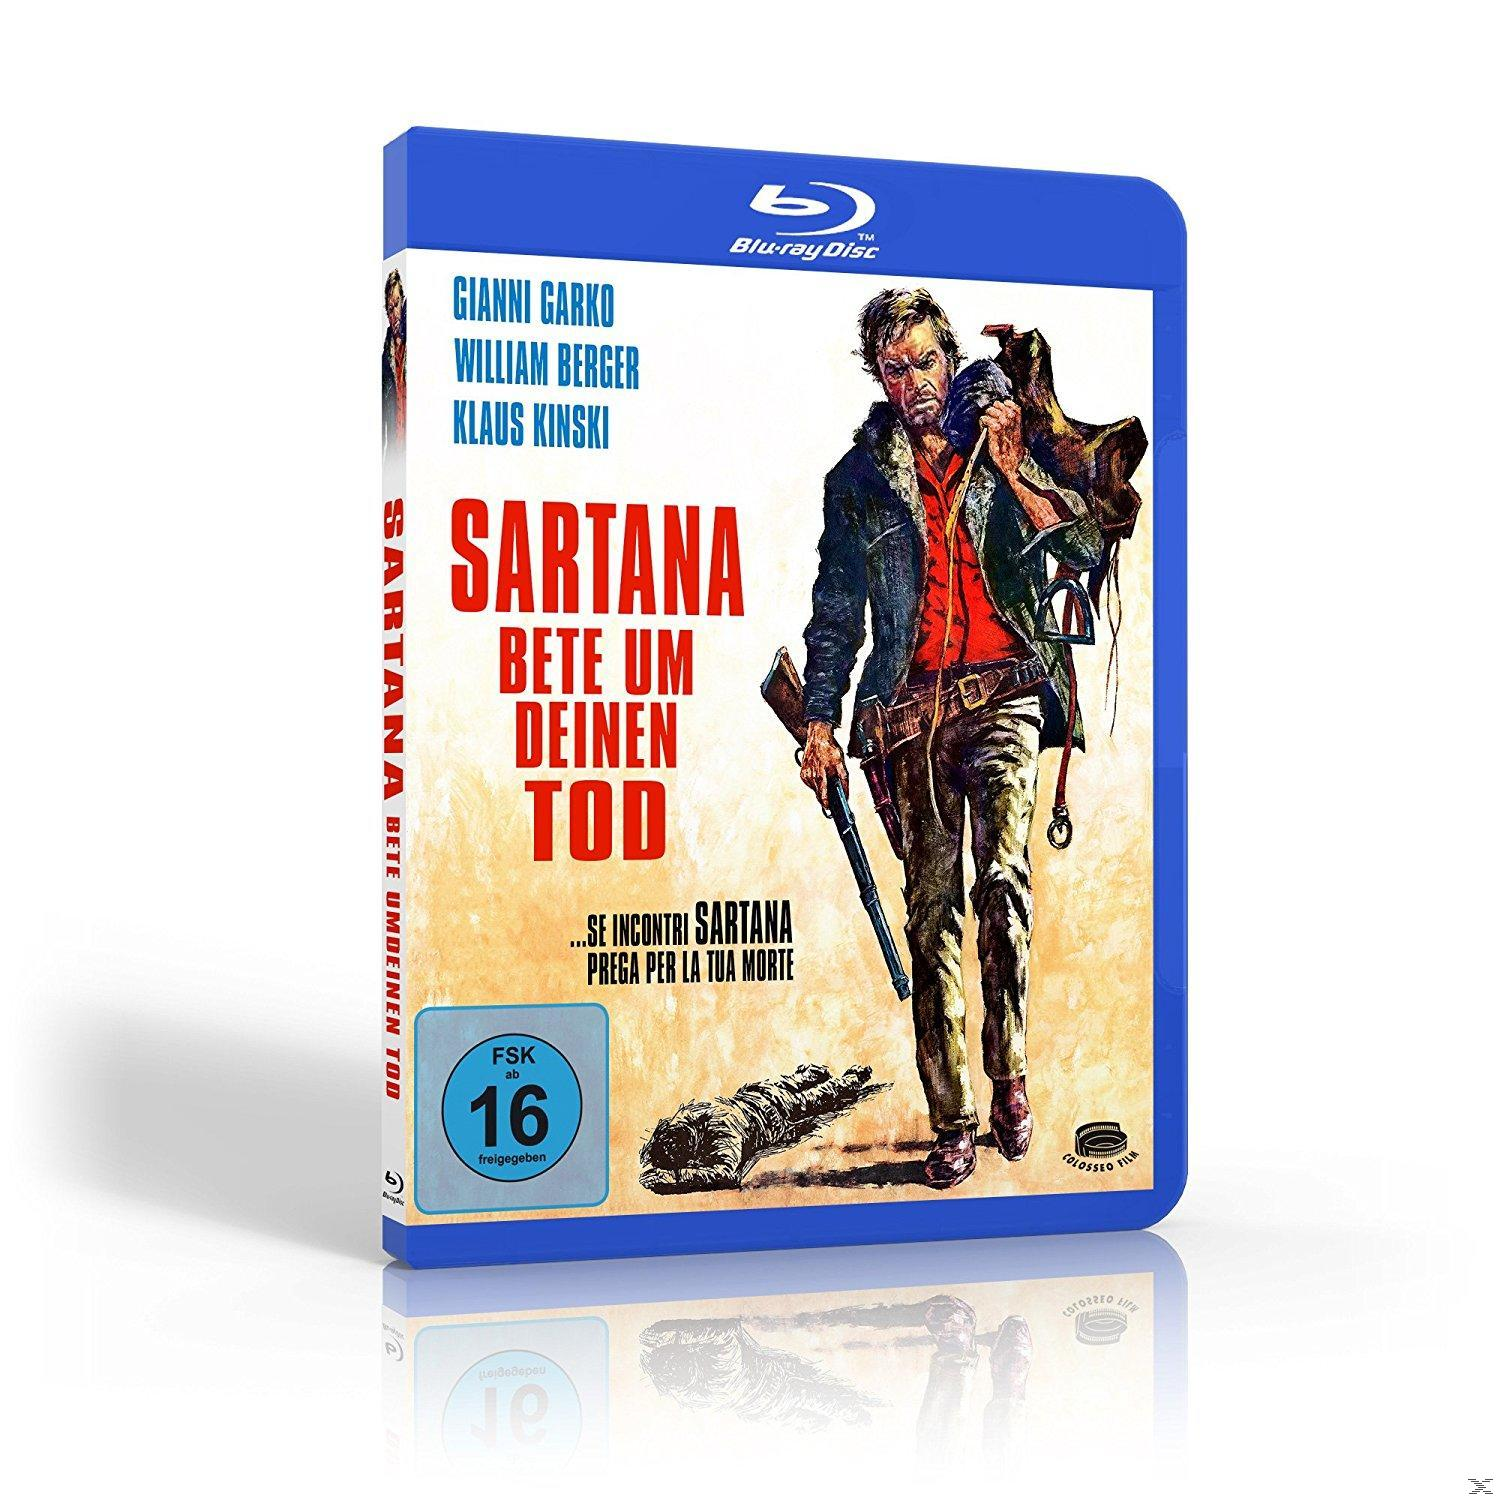 um Blu-ray Tod Bete - deinen Sartana